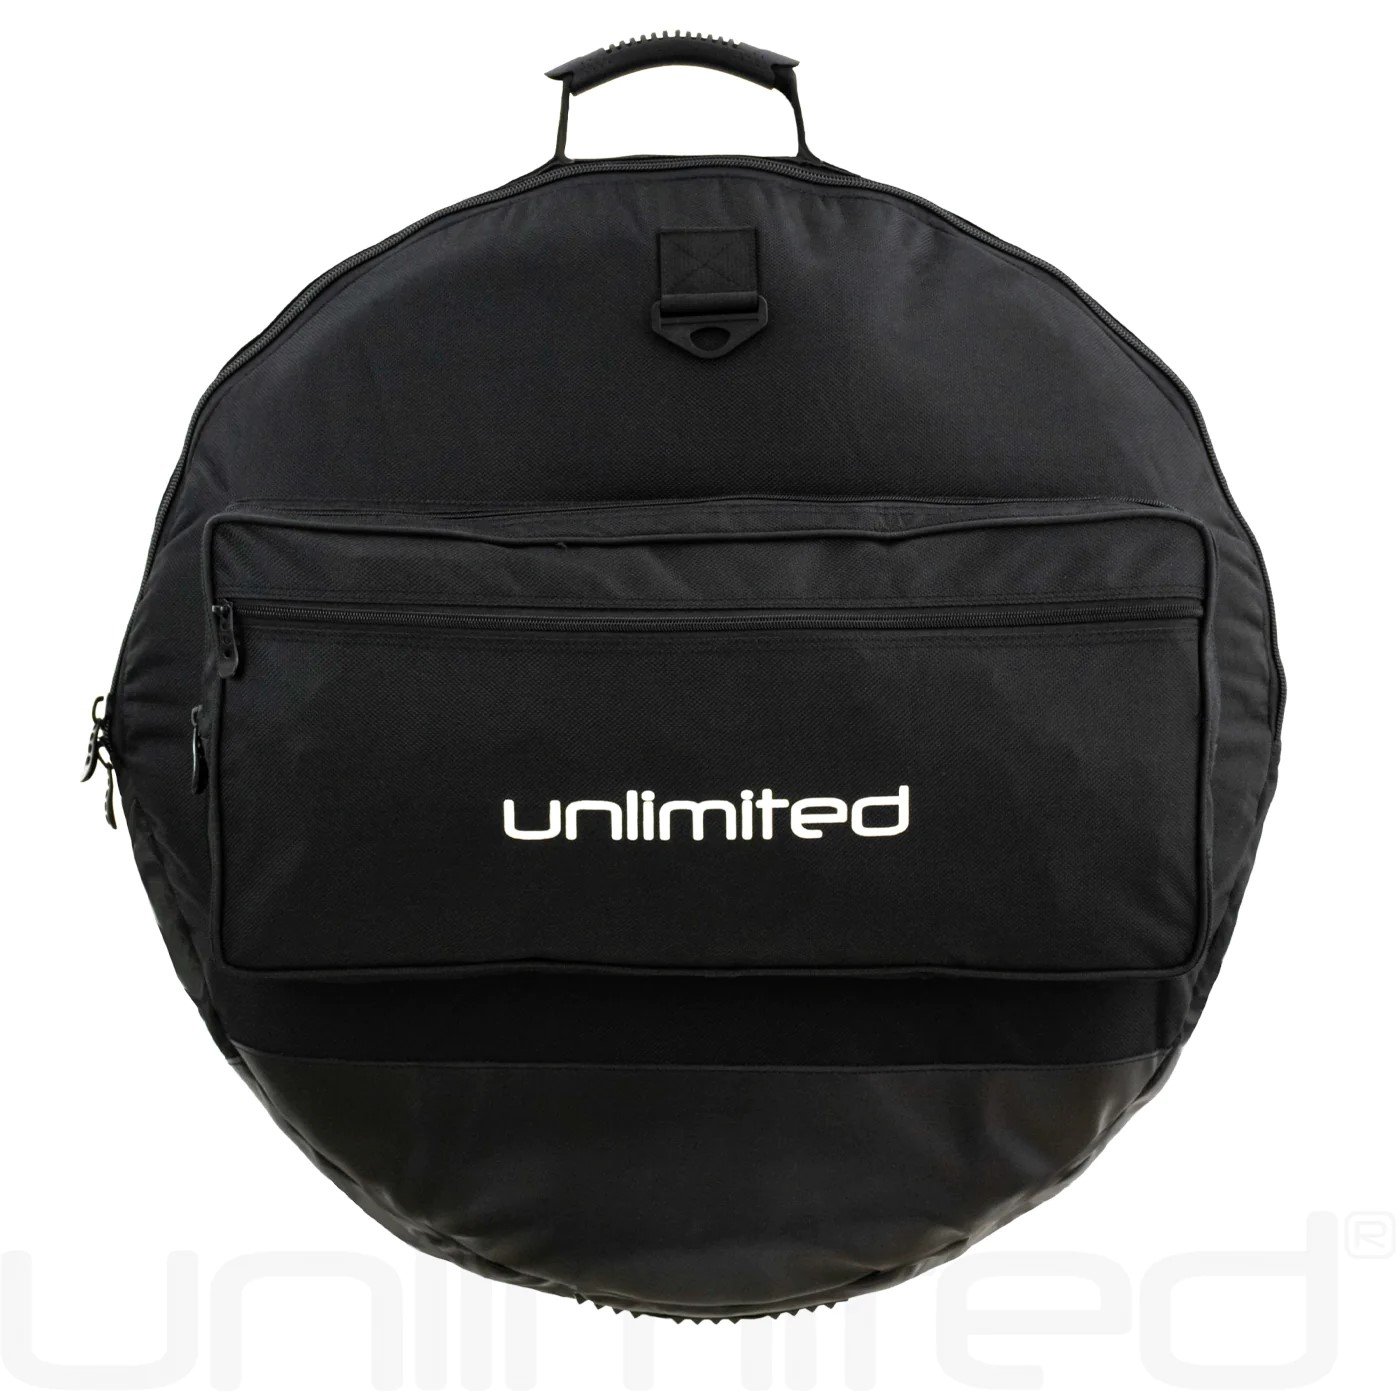 Gongs Unlimited backpack bag front - jpeg.jpg